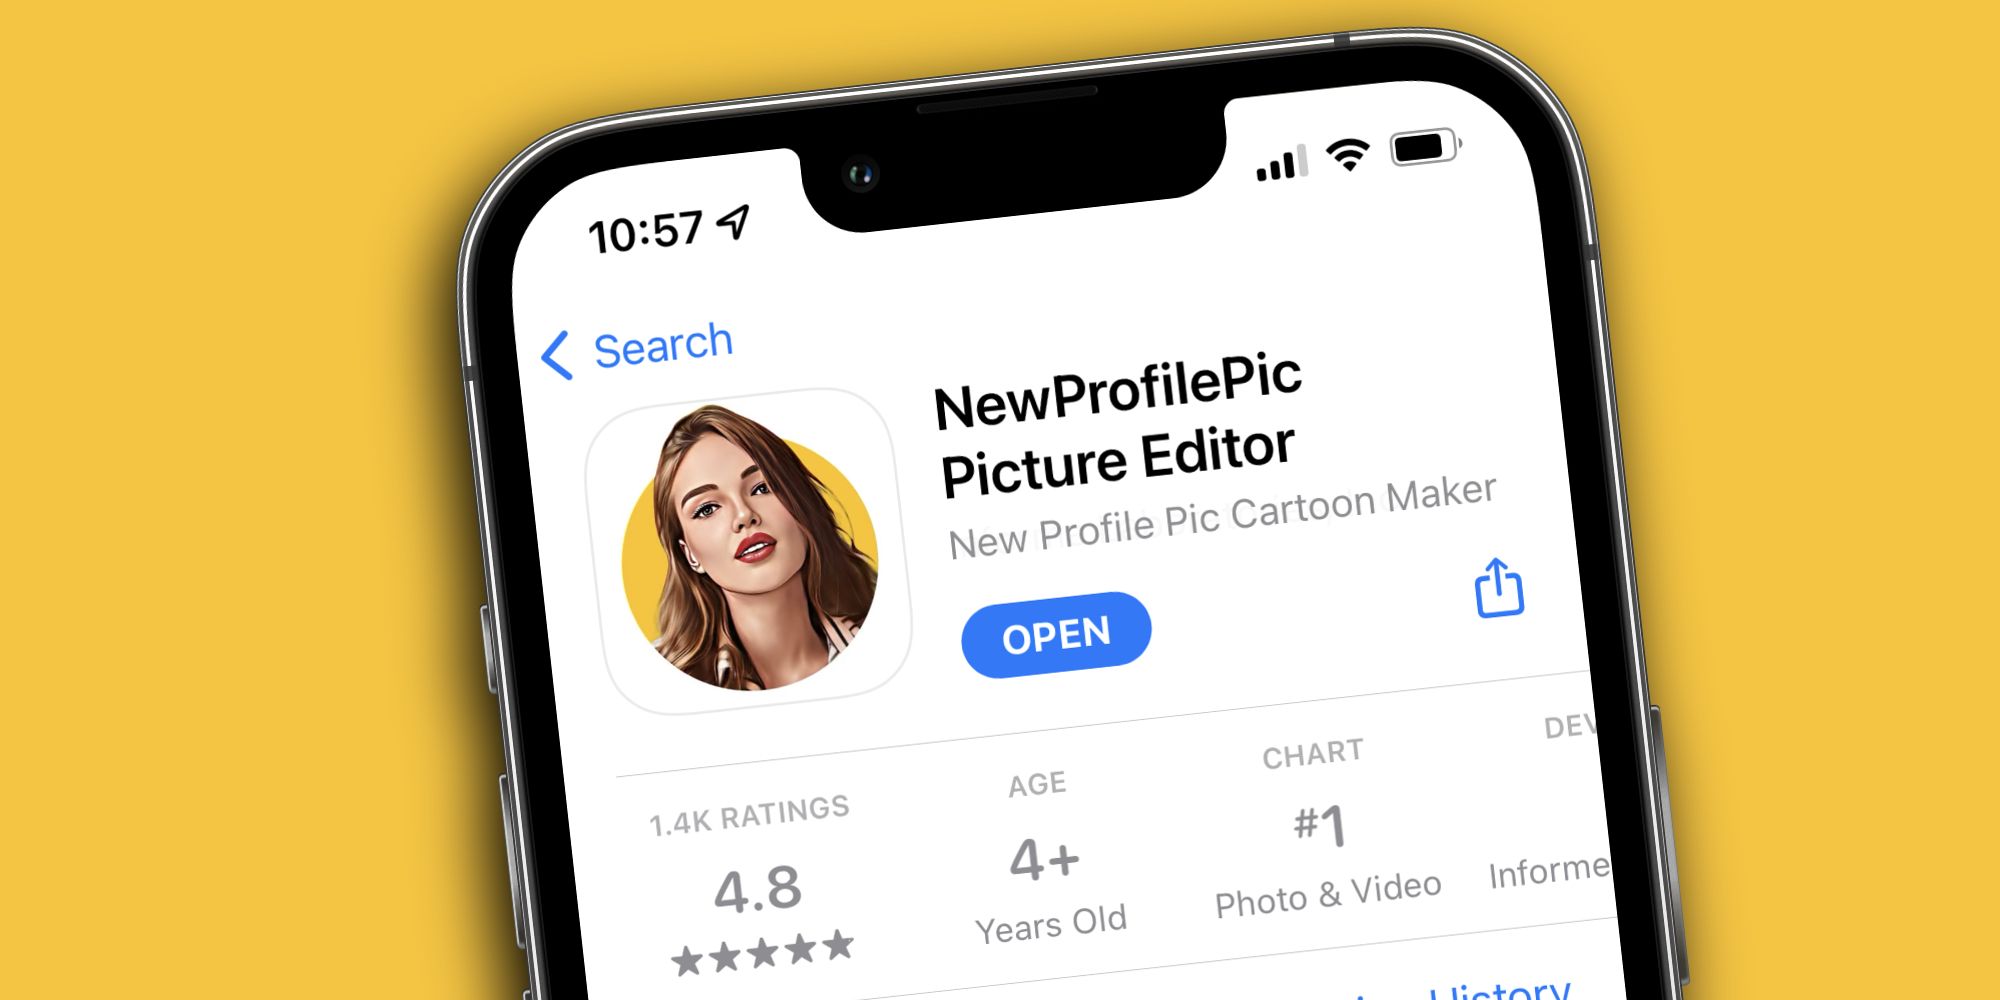 The New Profile Pic app